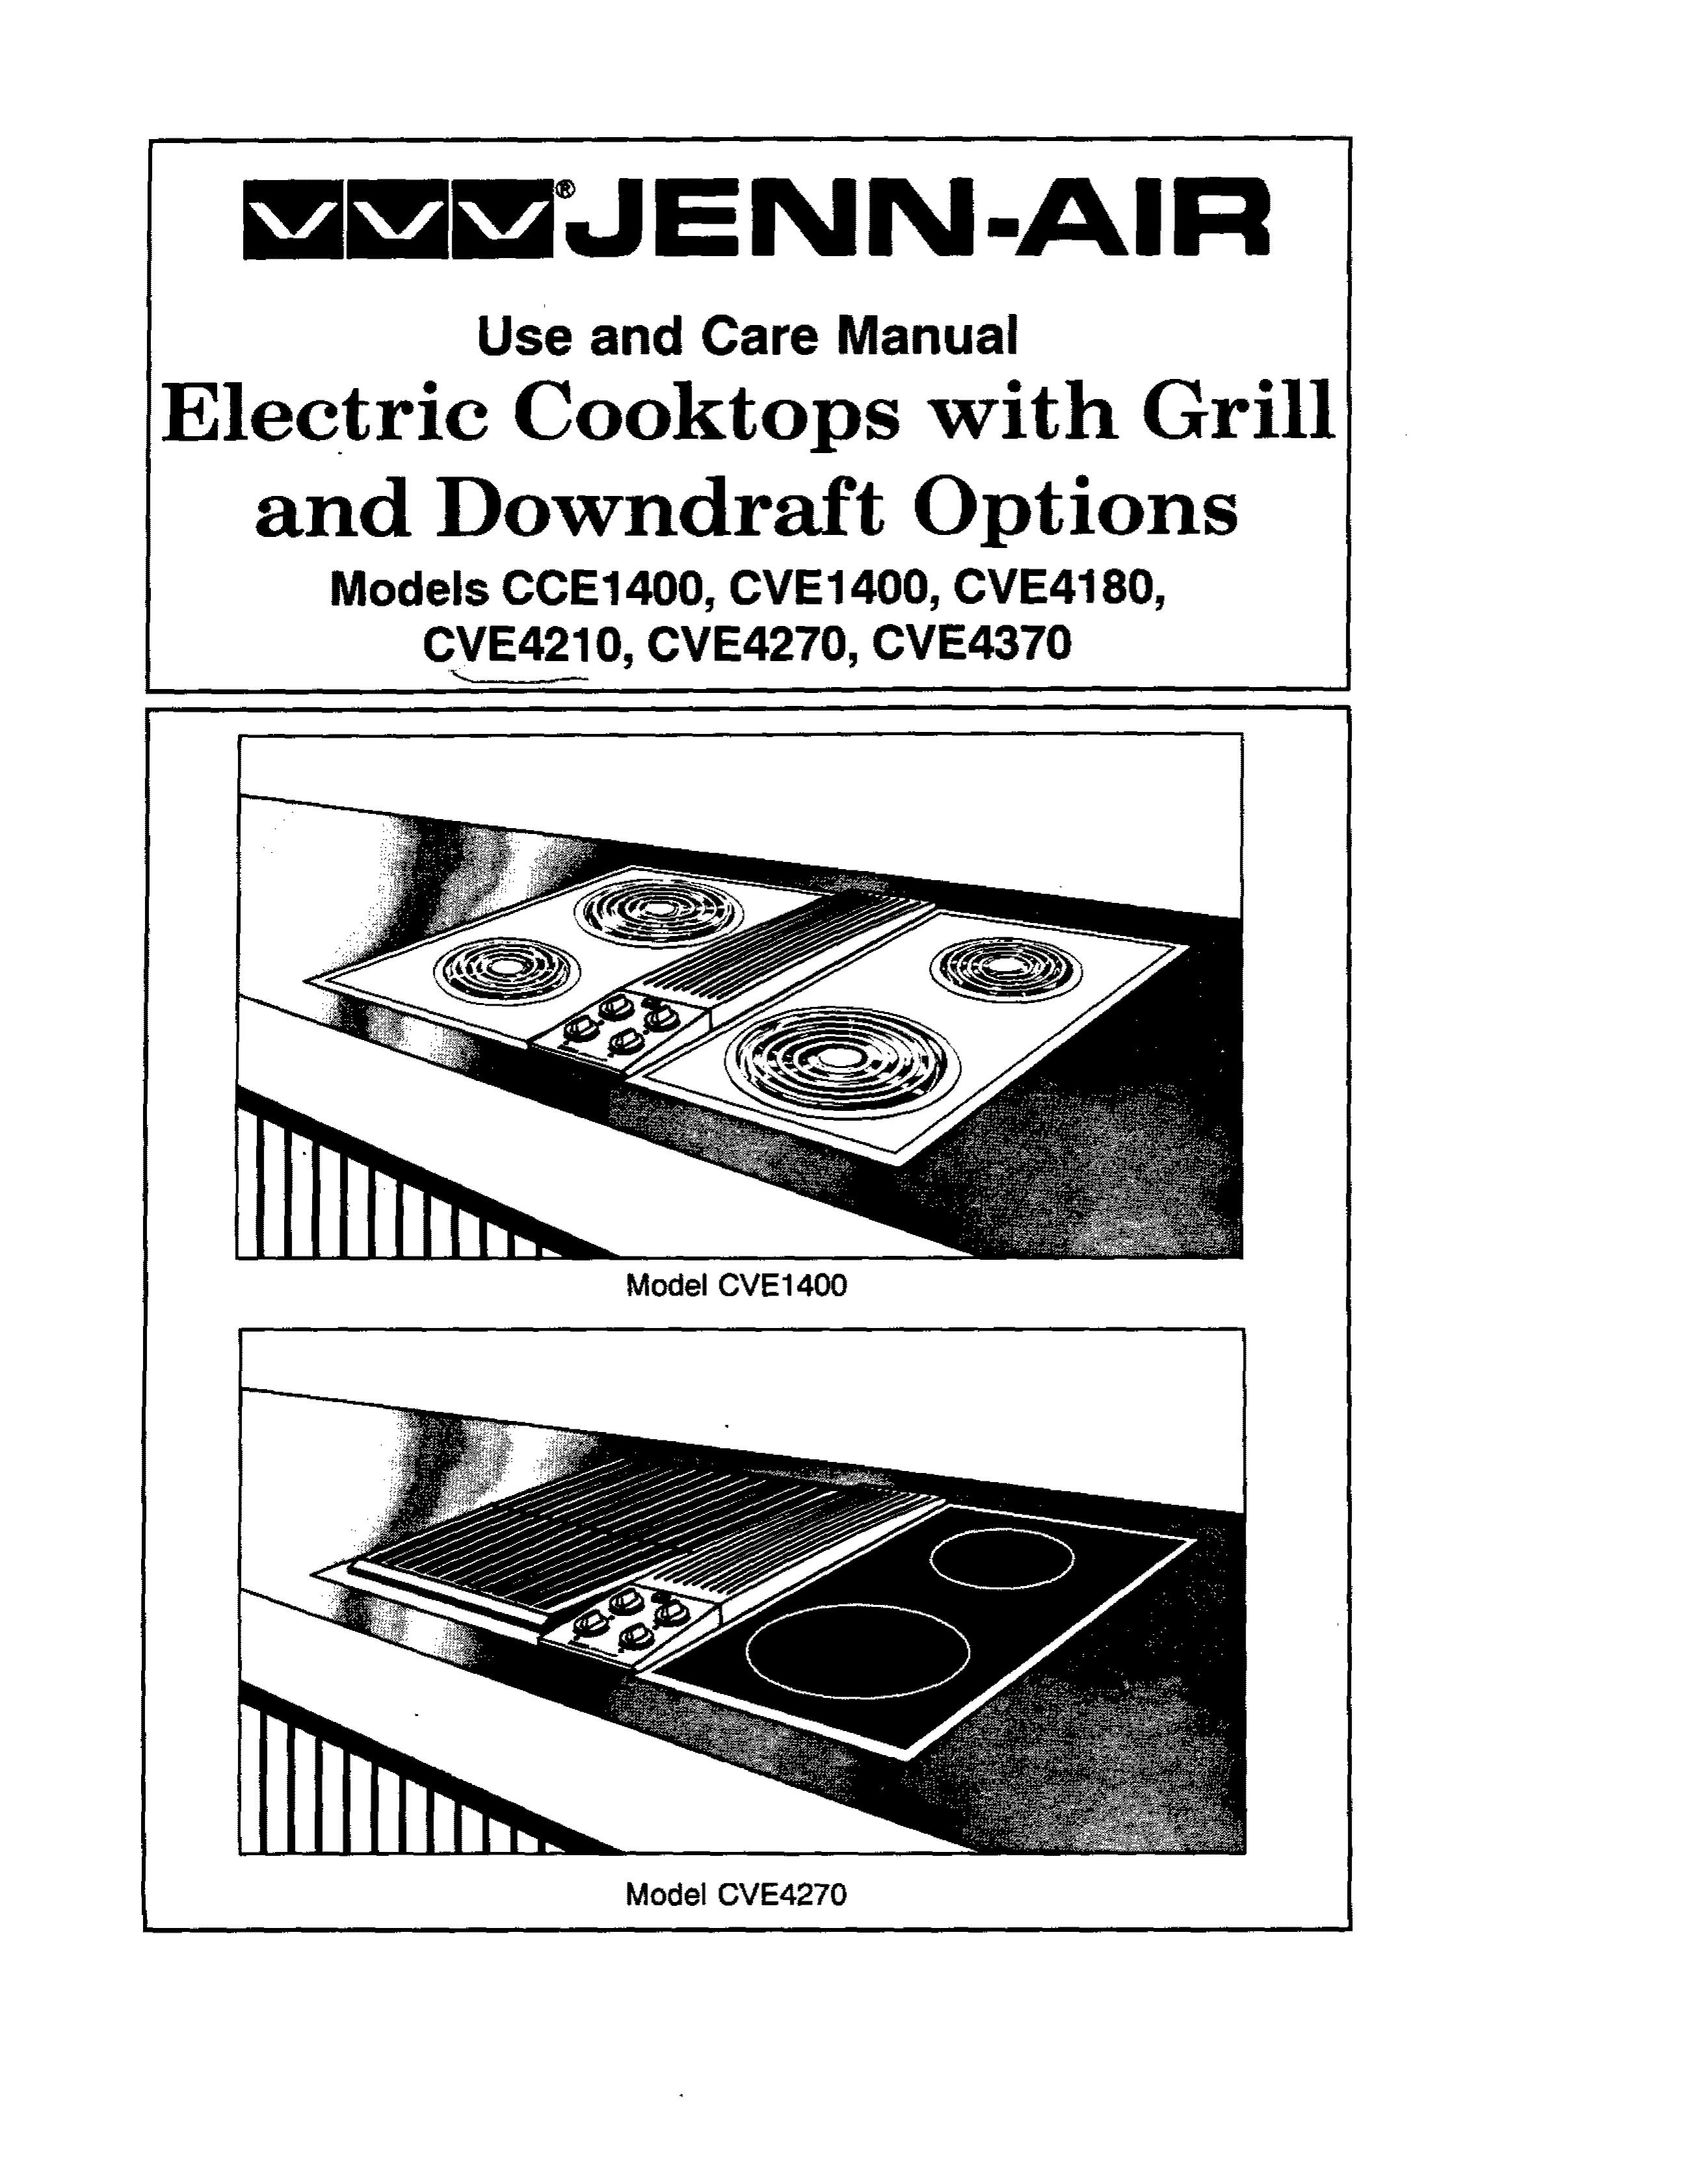 Jenn-Air CCE1400 Cooktop User Manual